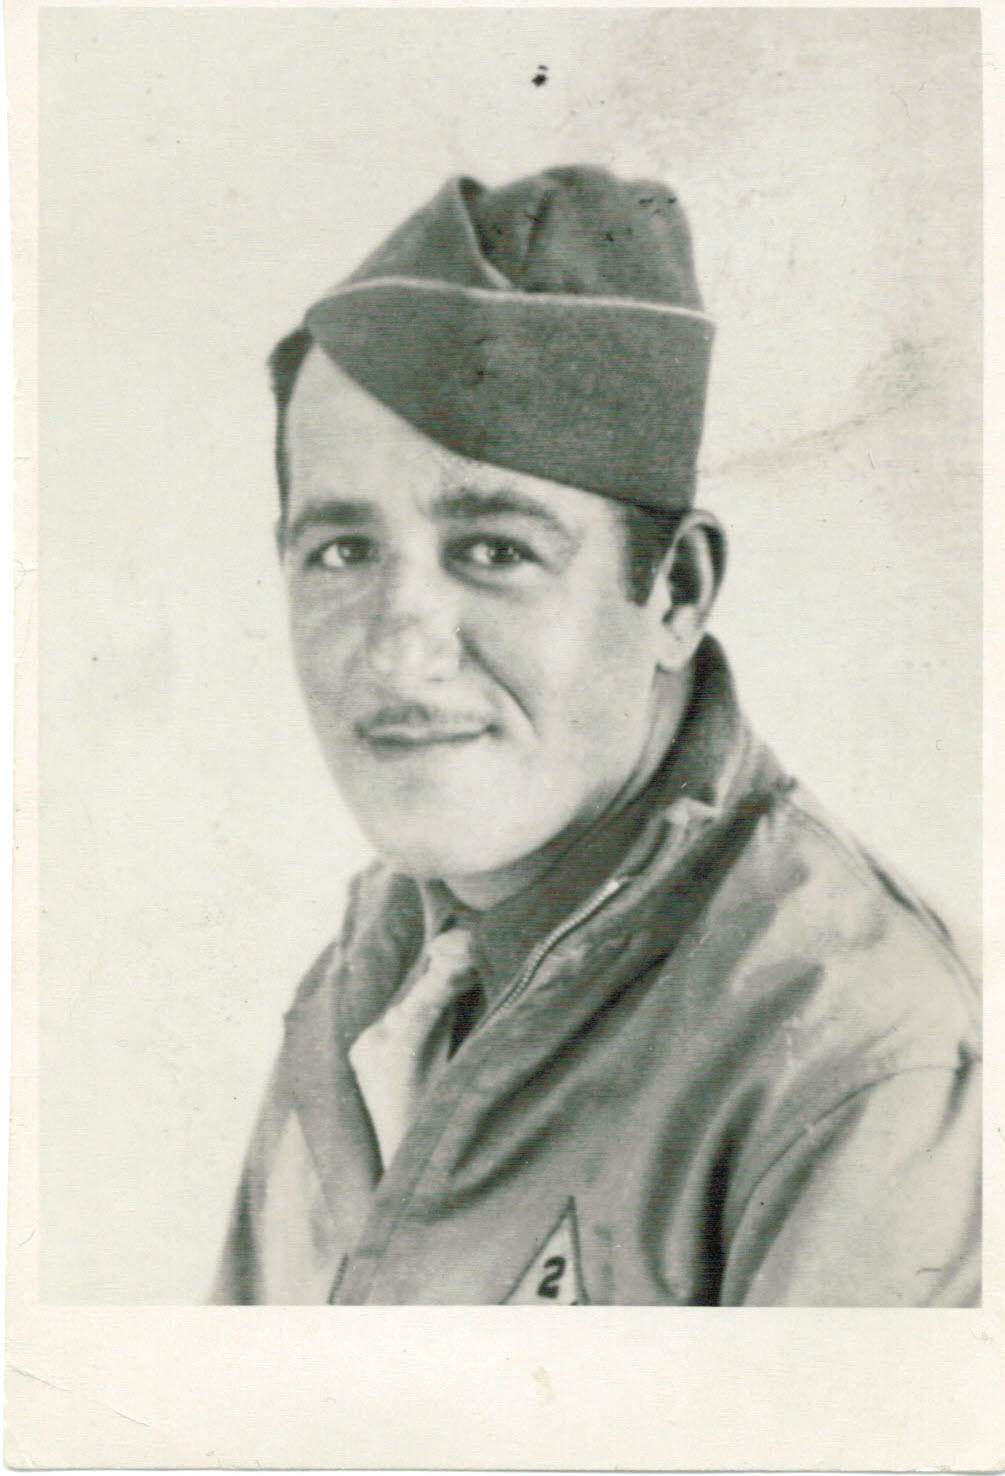 Corporal Ralph Sirico